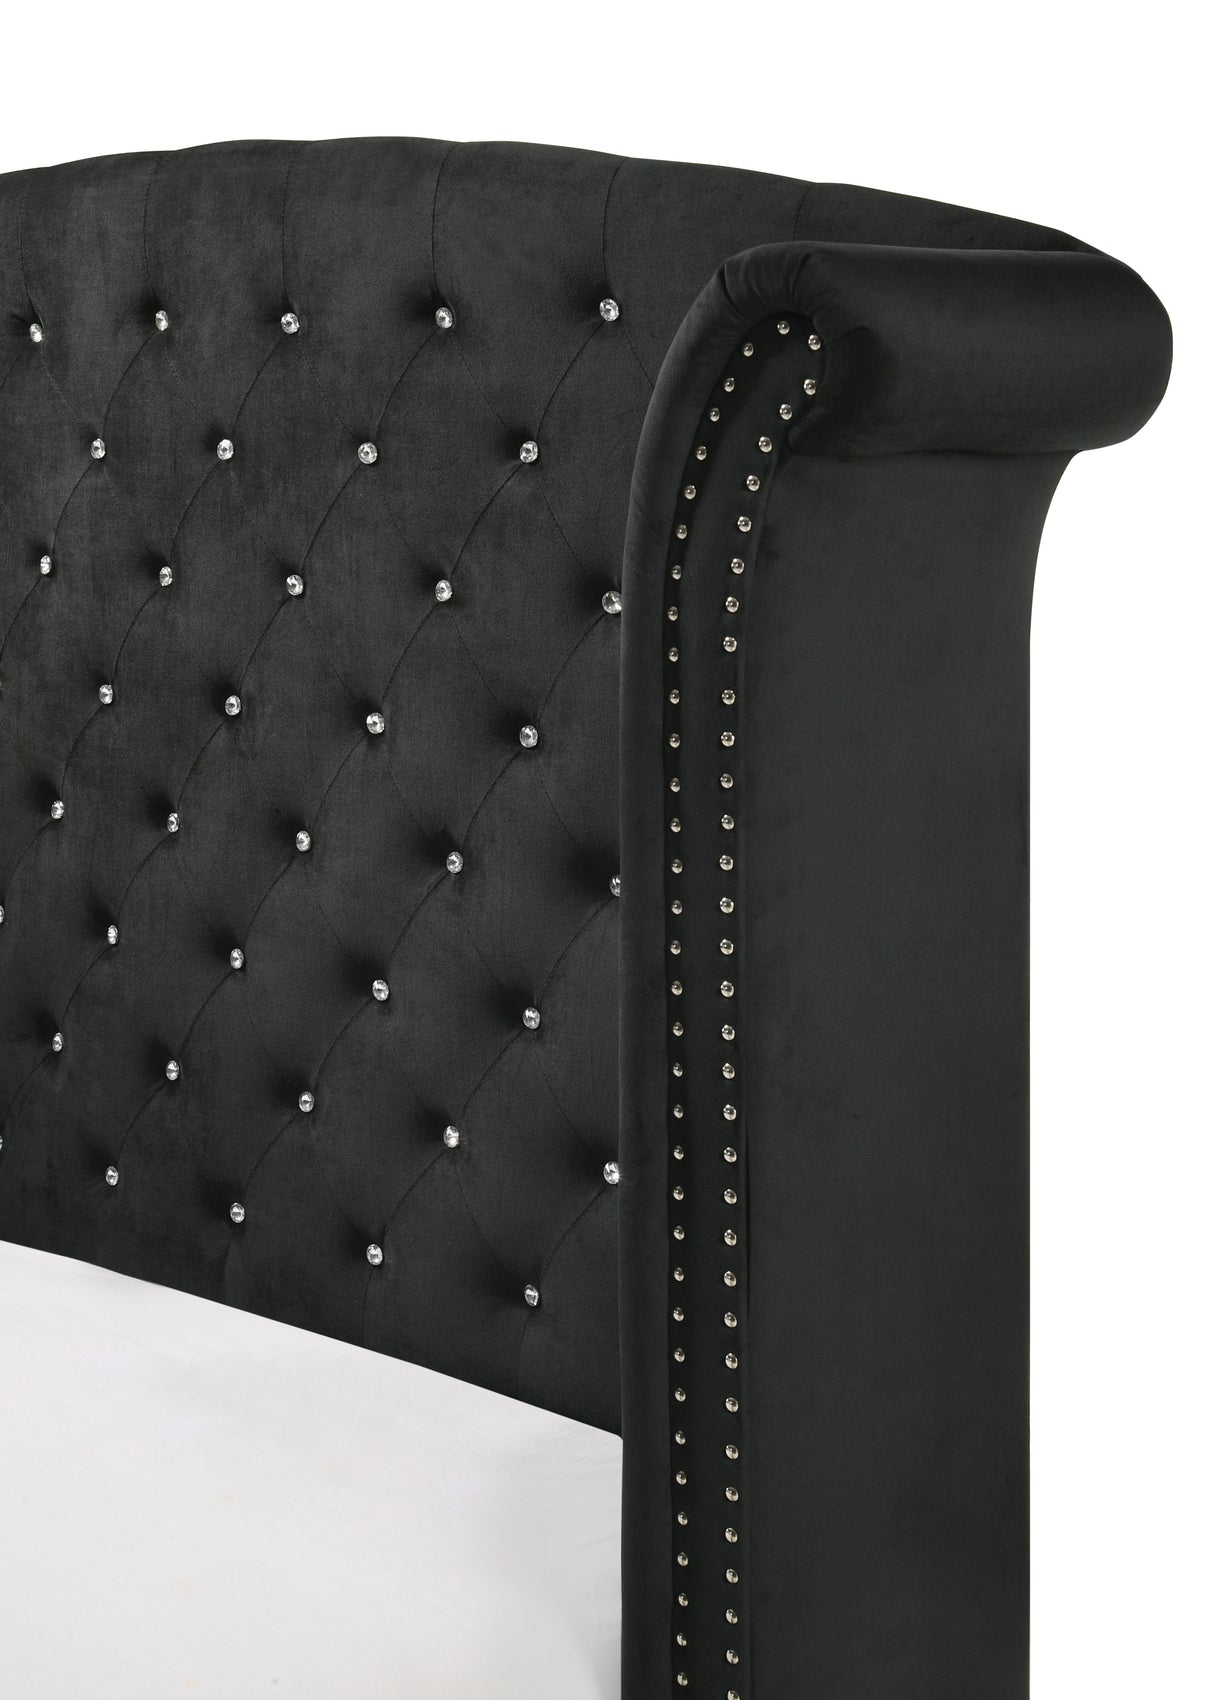 Lucinda Black King Upholstered Wingback Panel Bed